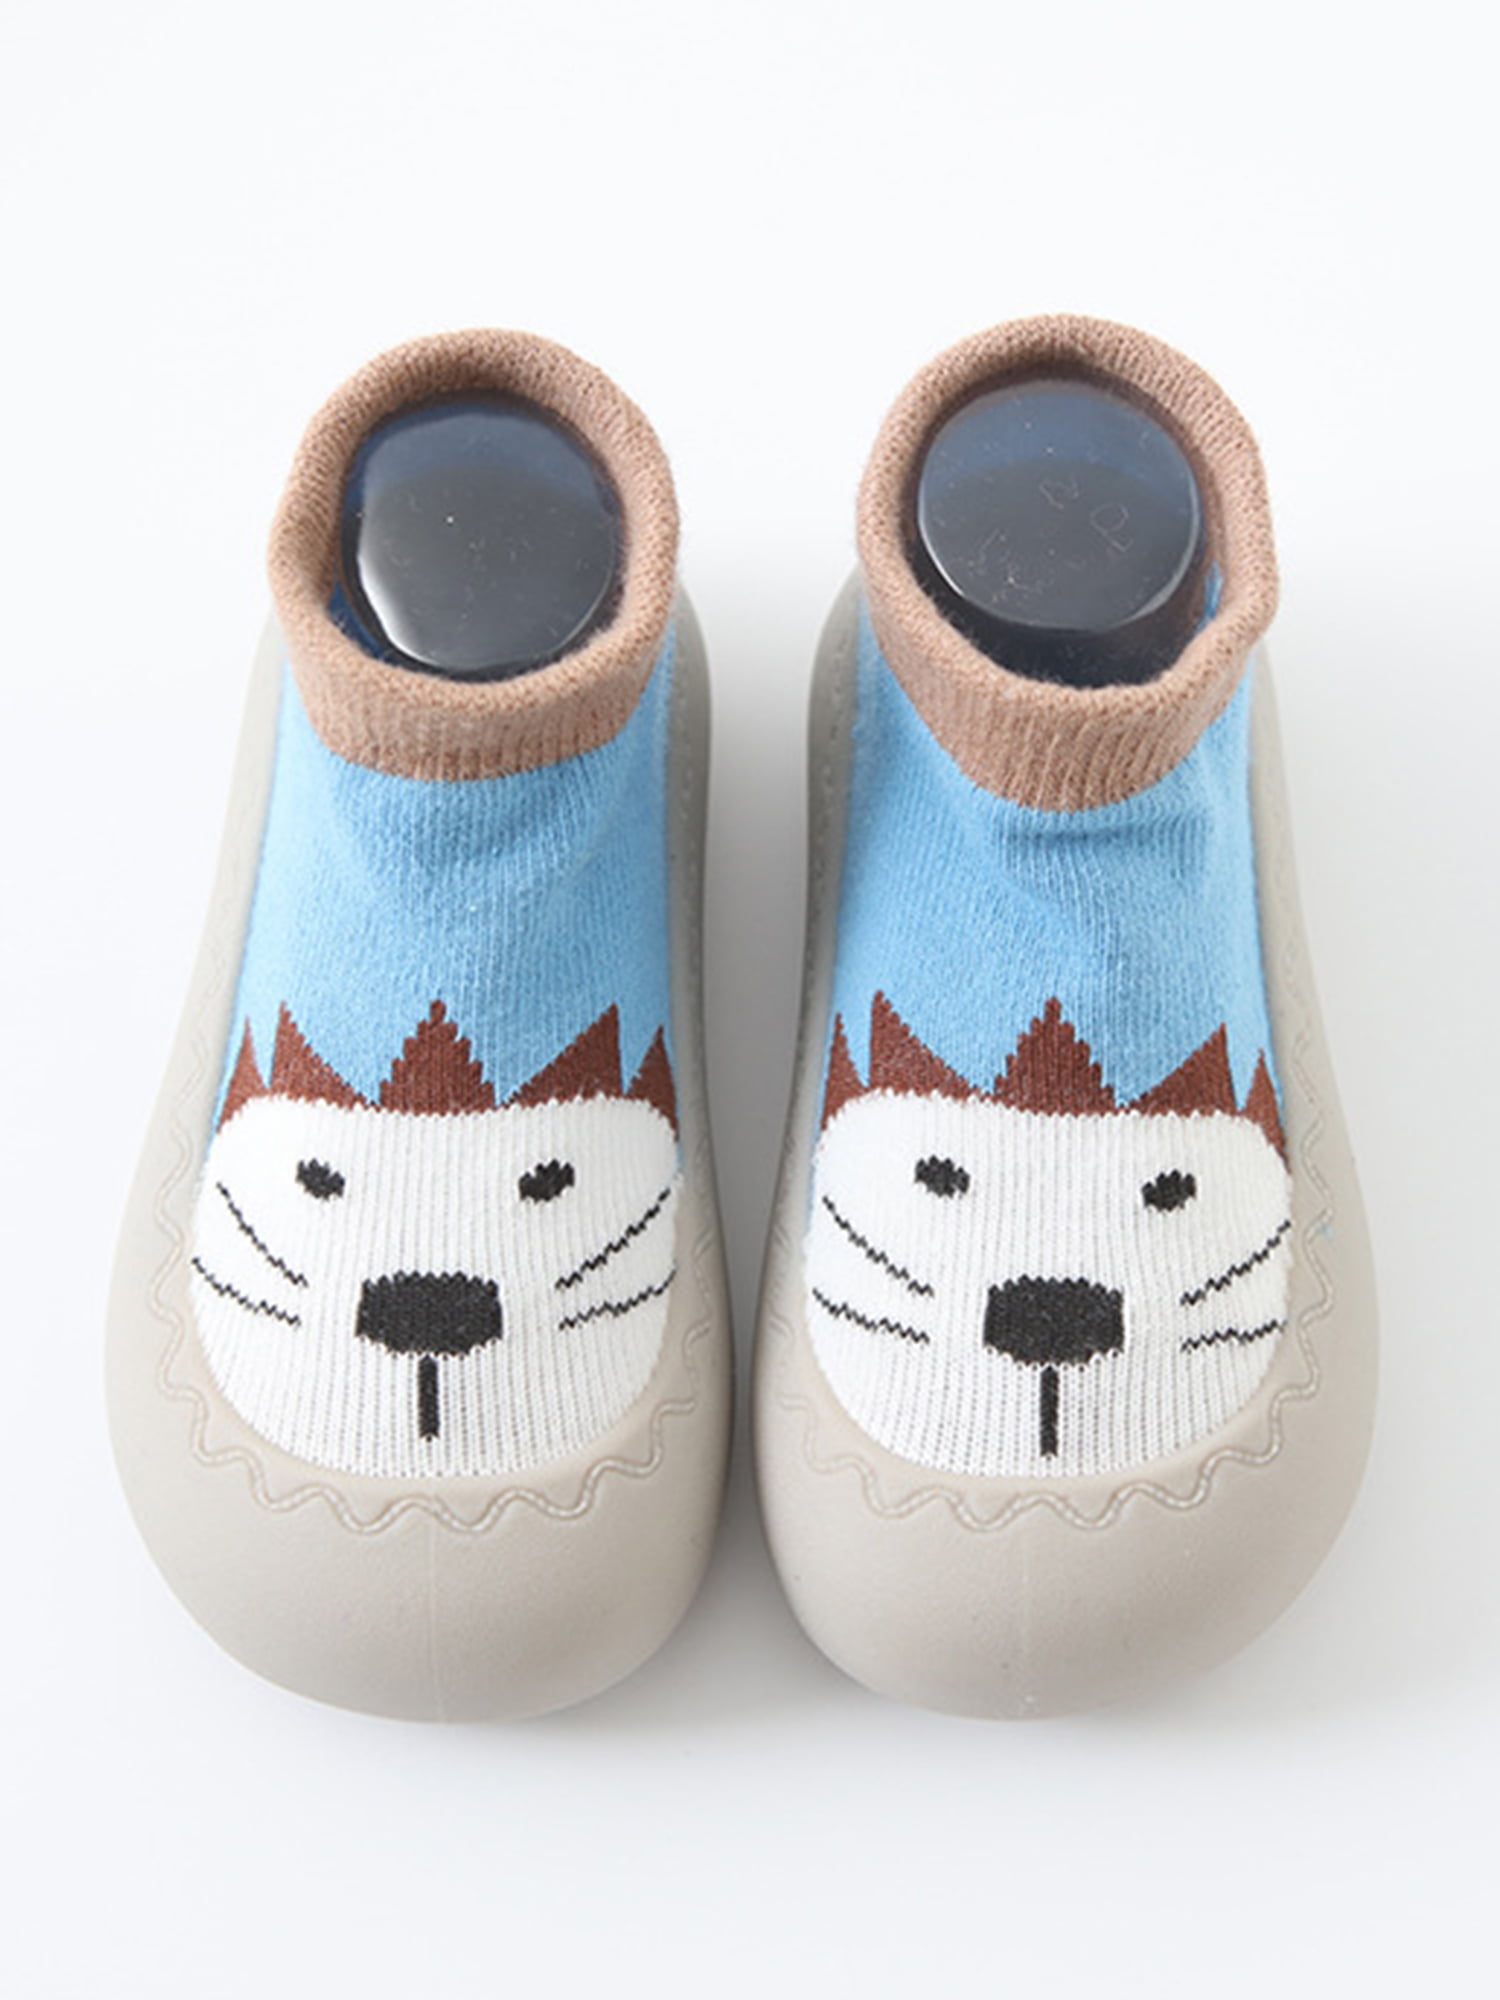 Ymiytan Baby Sock Shoes First Blue Floor Walker Soft Slippers Breathable Sole Non-Slip Shoe Slipper 7C Home Bedroom Socks